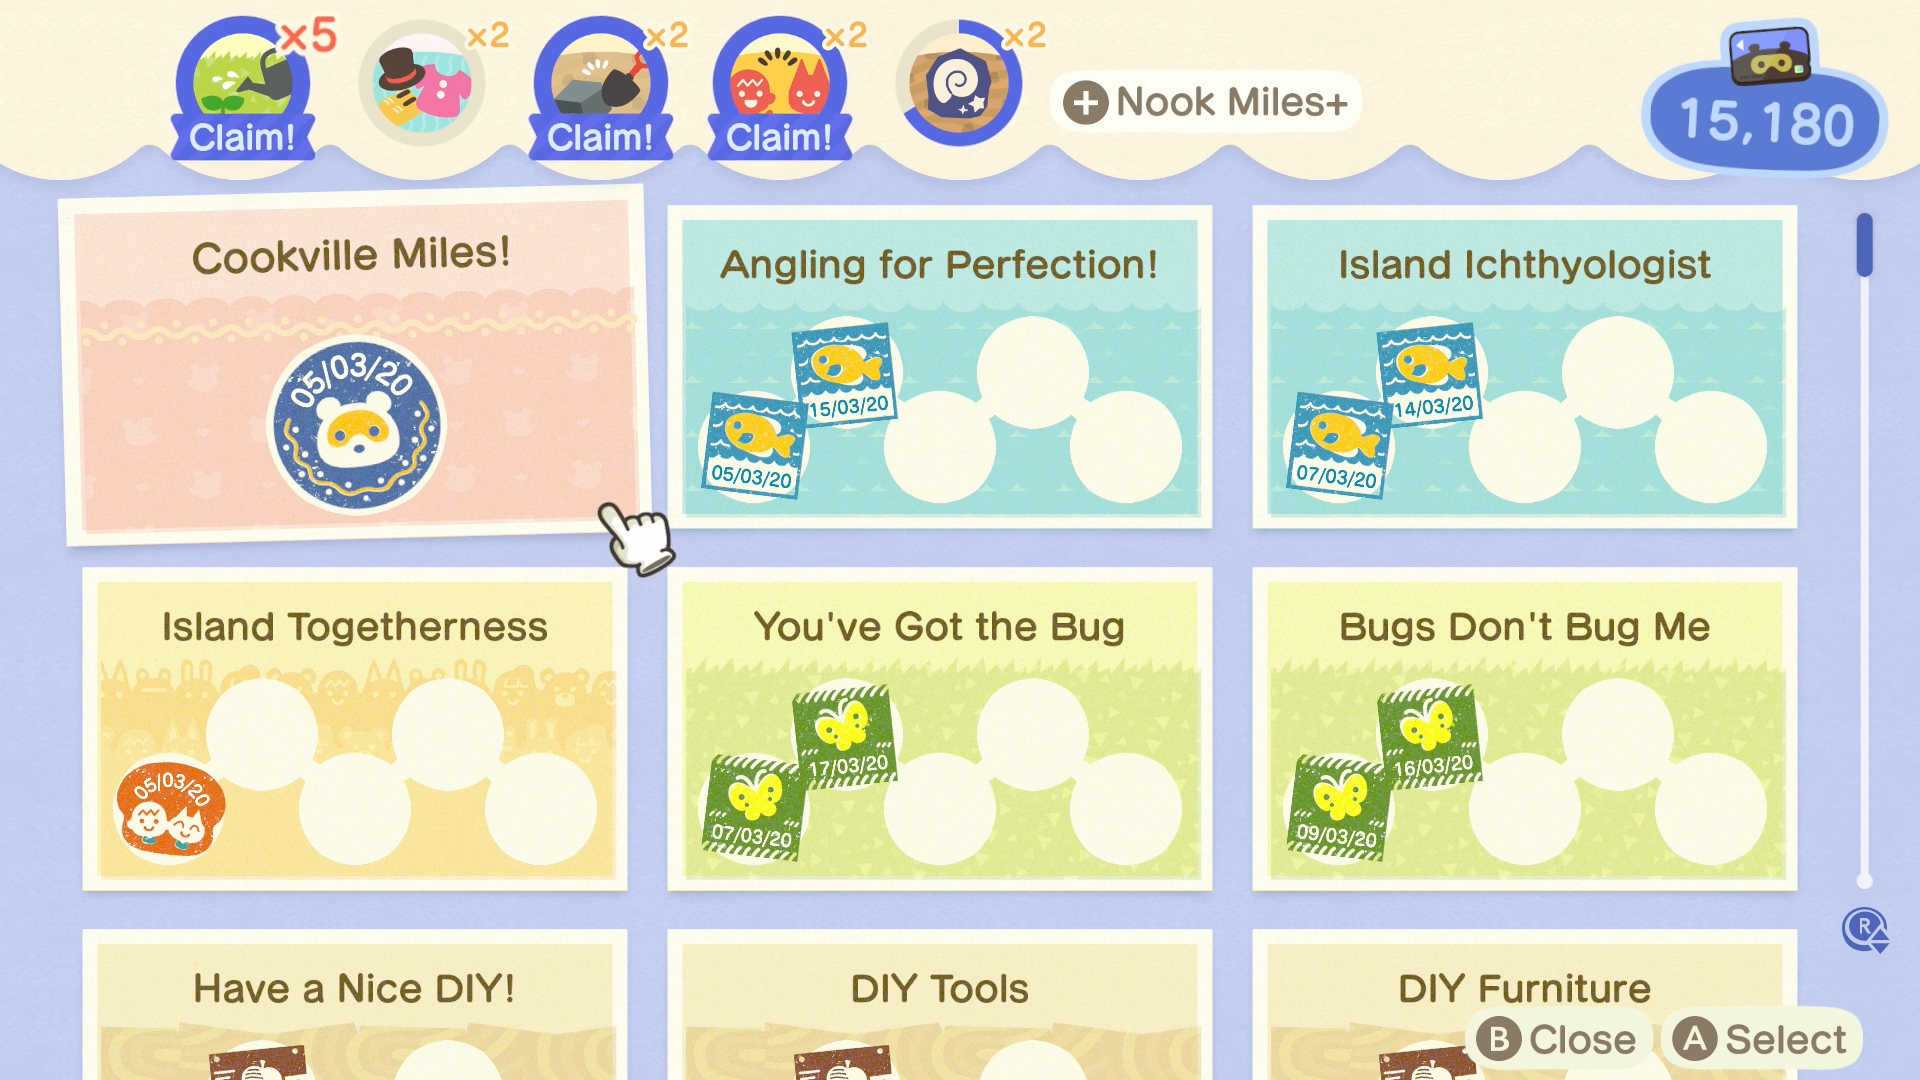 Animal Crossing: New Horizons guide